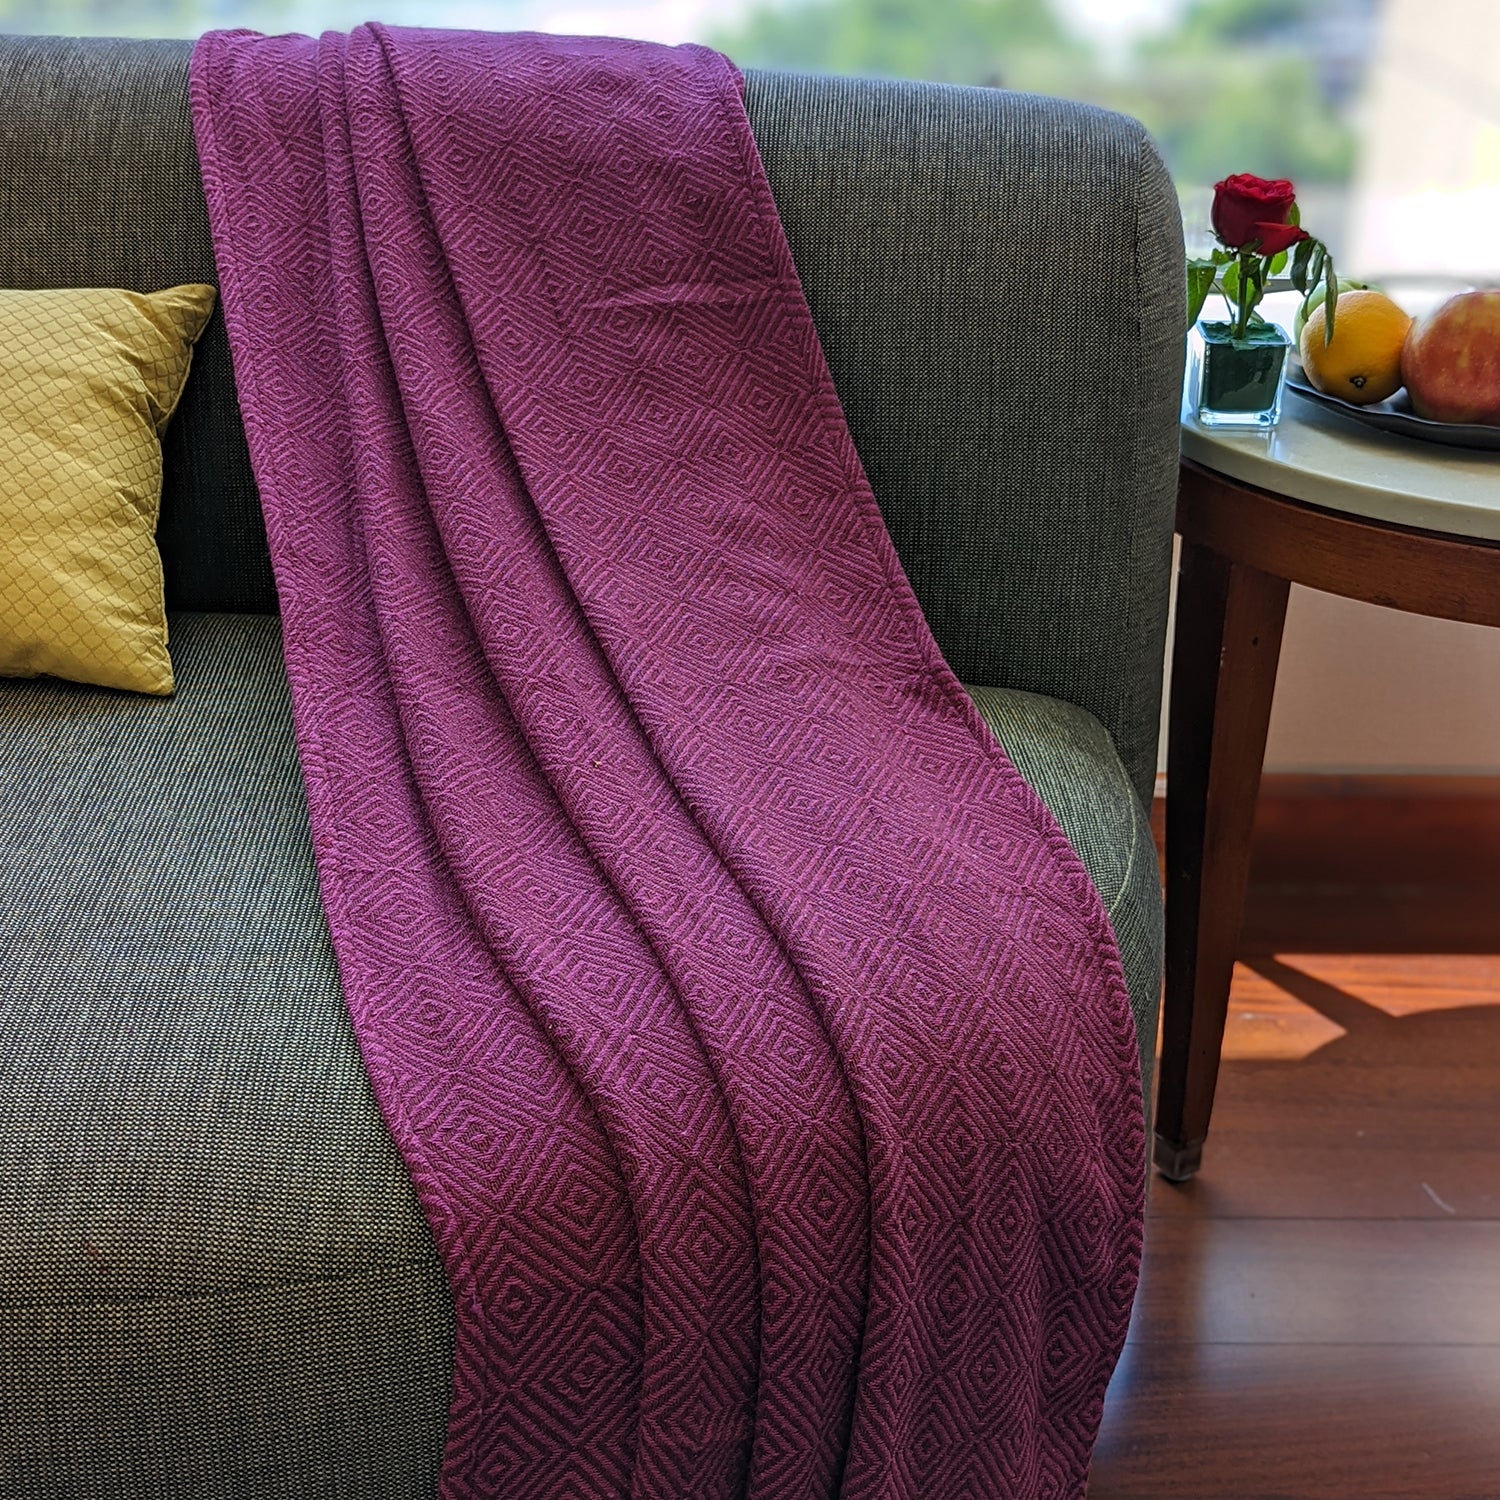 Avocado Linens Cotton Blend Sofa Throws - Argyle Maroon & Pink